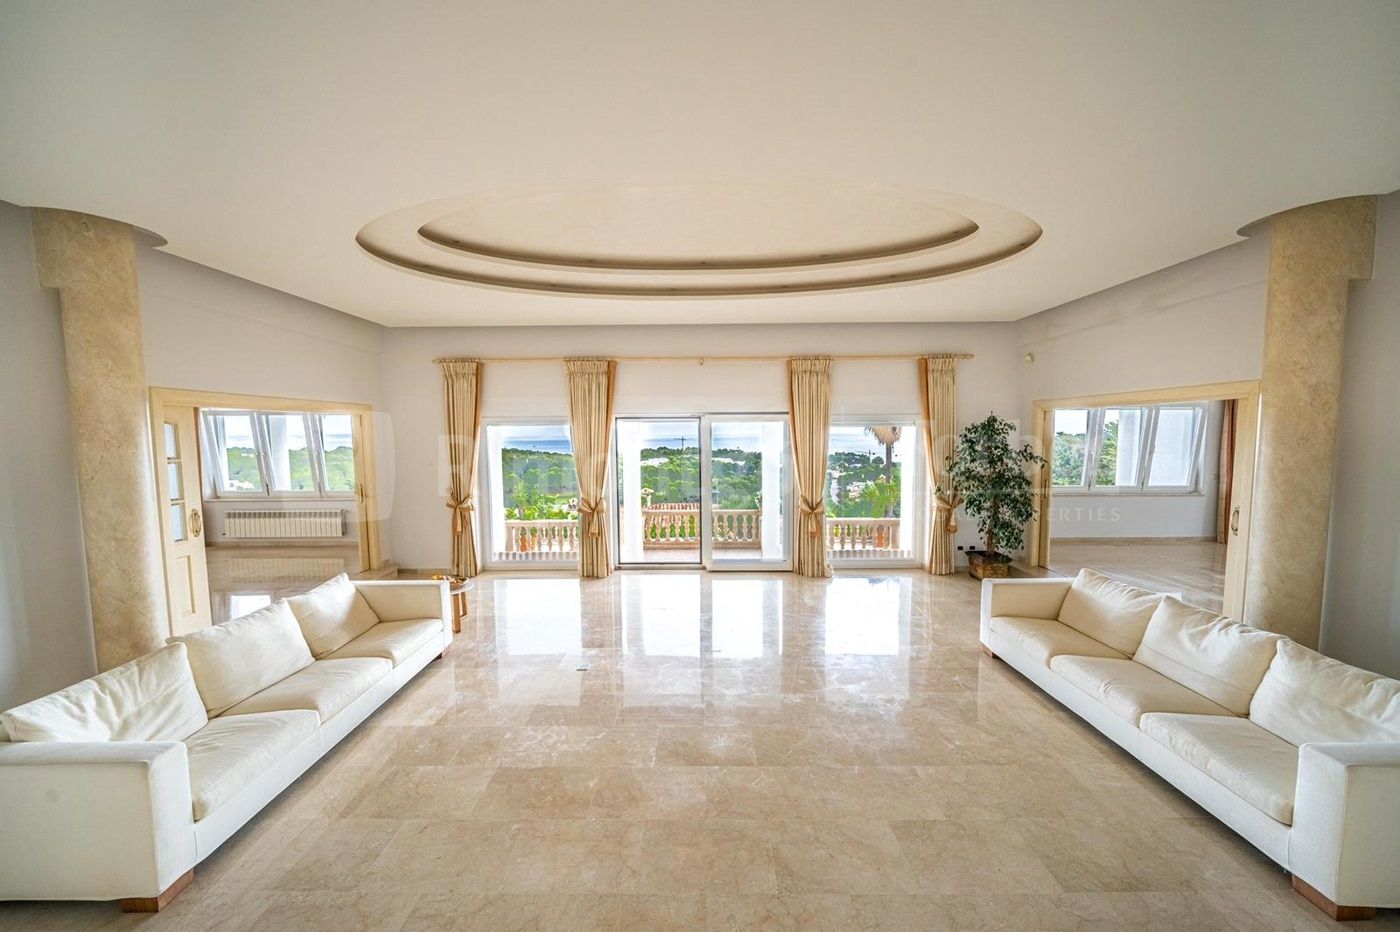 Beautiful villa with Mediterranean style and sea views in Mallorca.